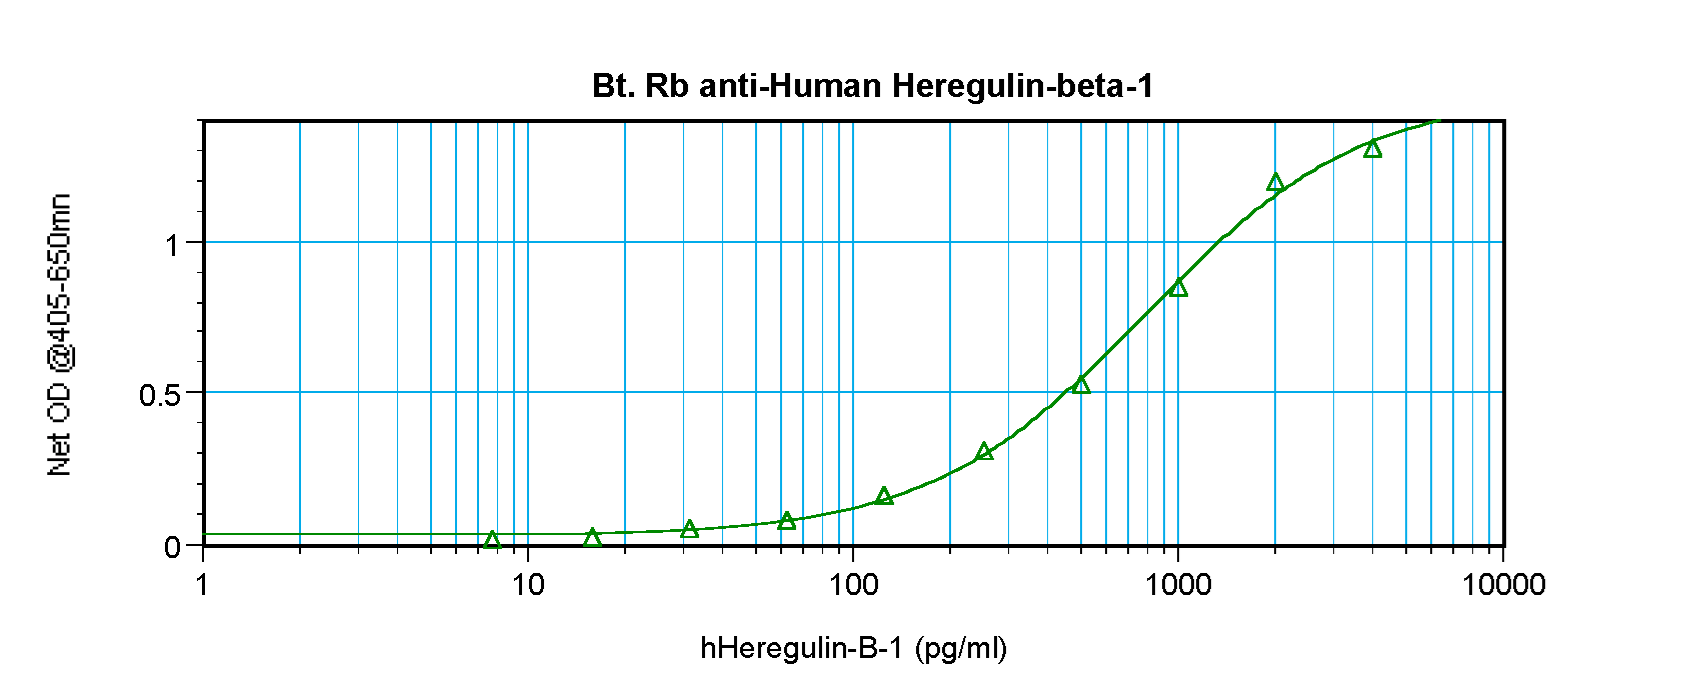 NRG1 / Heregulin / Neuregulin Antibody - Biotinylated Anti-Human Heregulinß-1 Sandwich ELISA